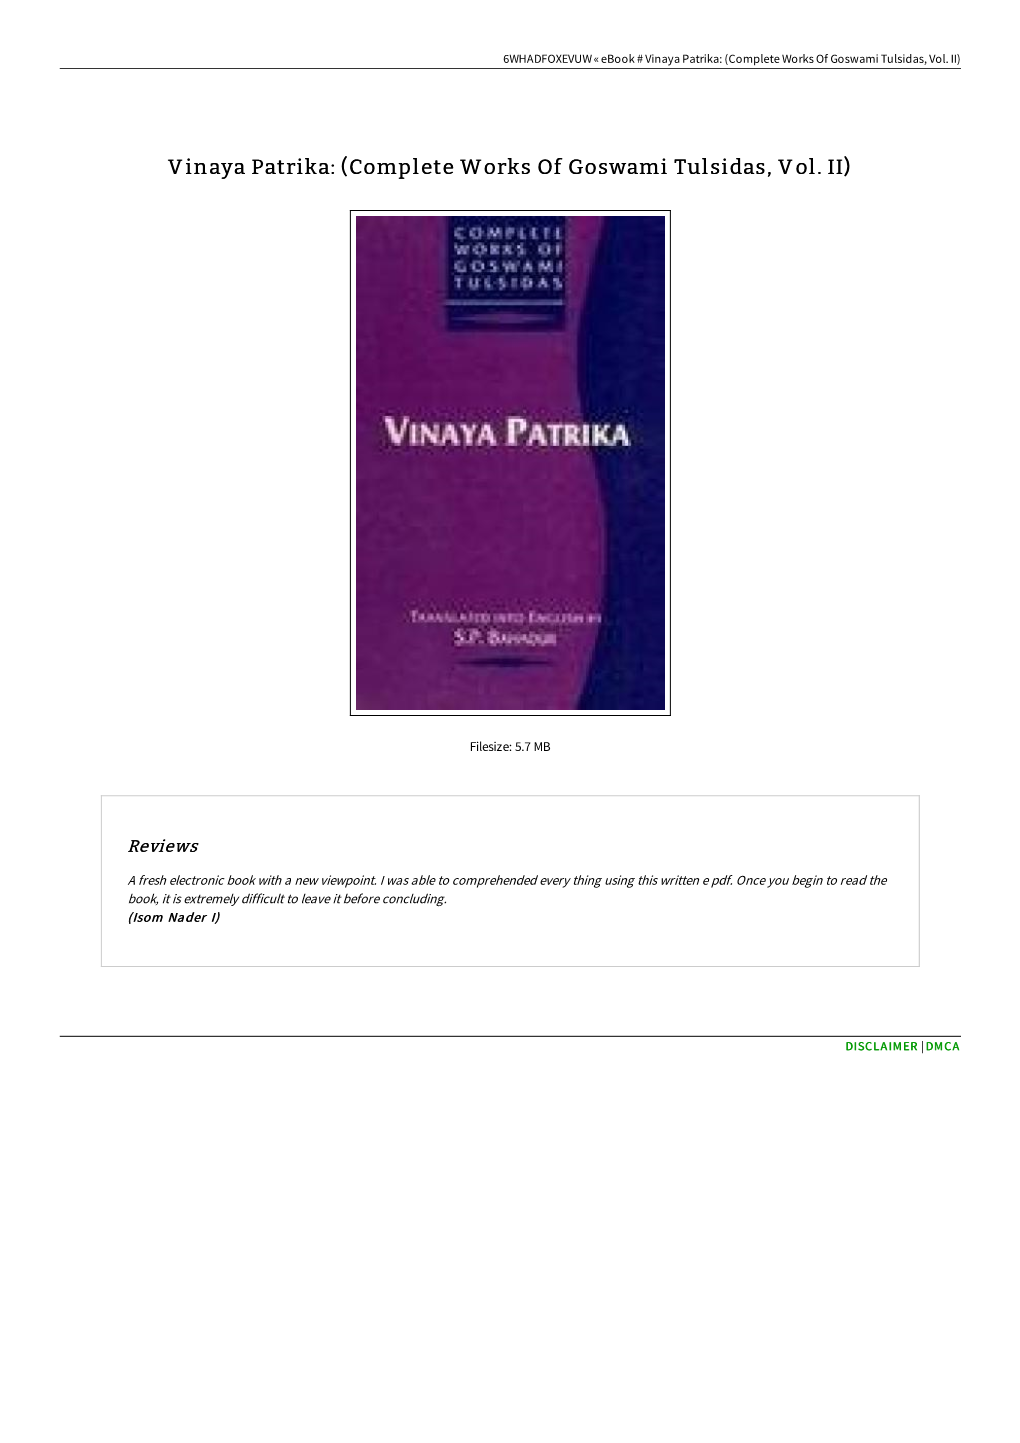 Read Book # Vinaya Patrika: (Complete Works of Goswami Tulsidas